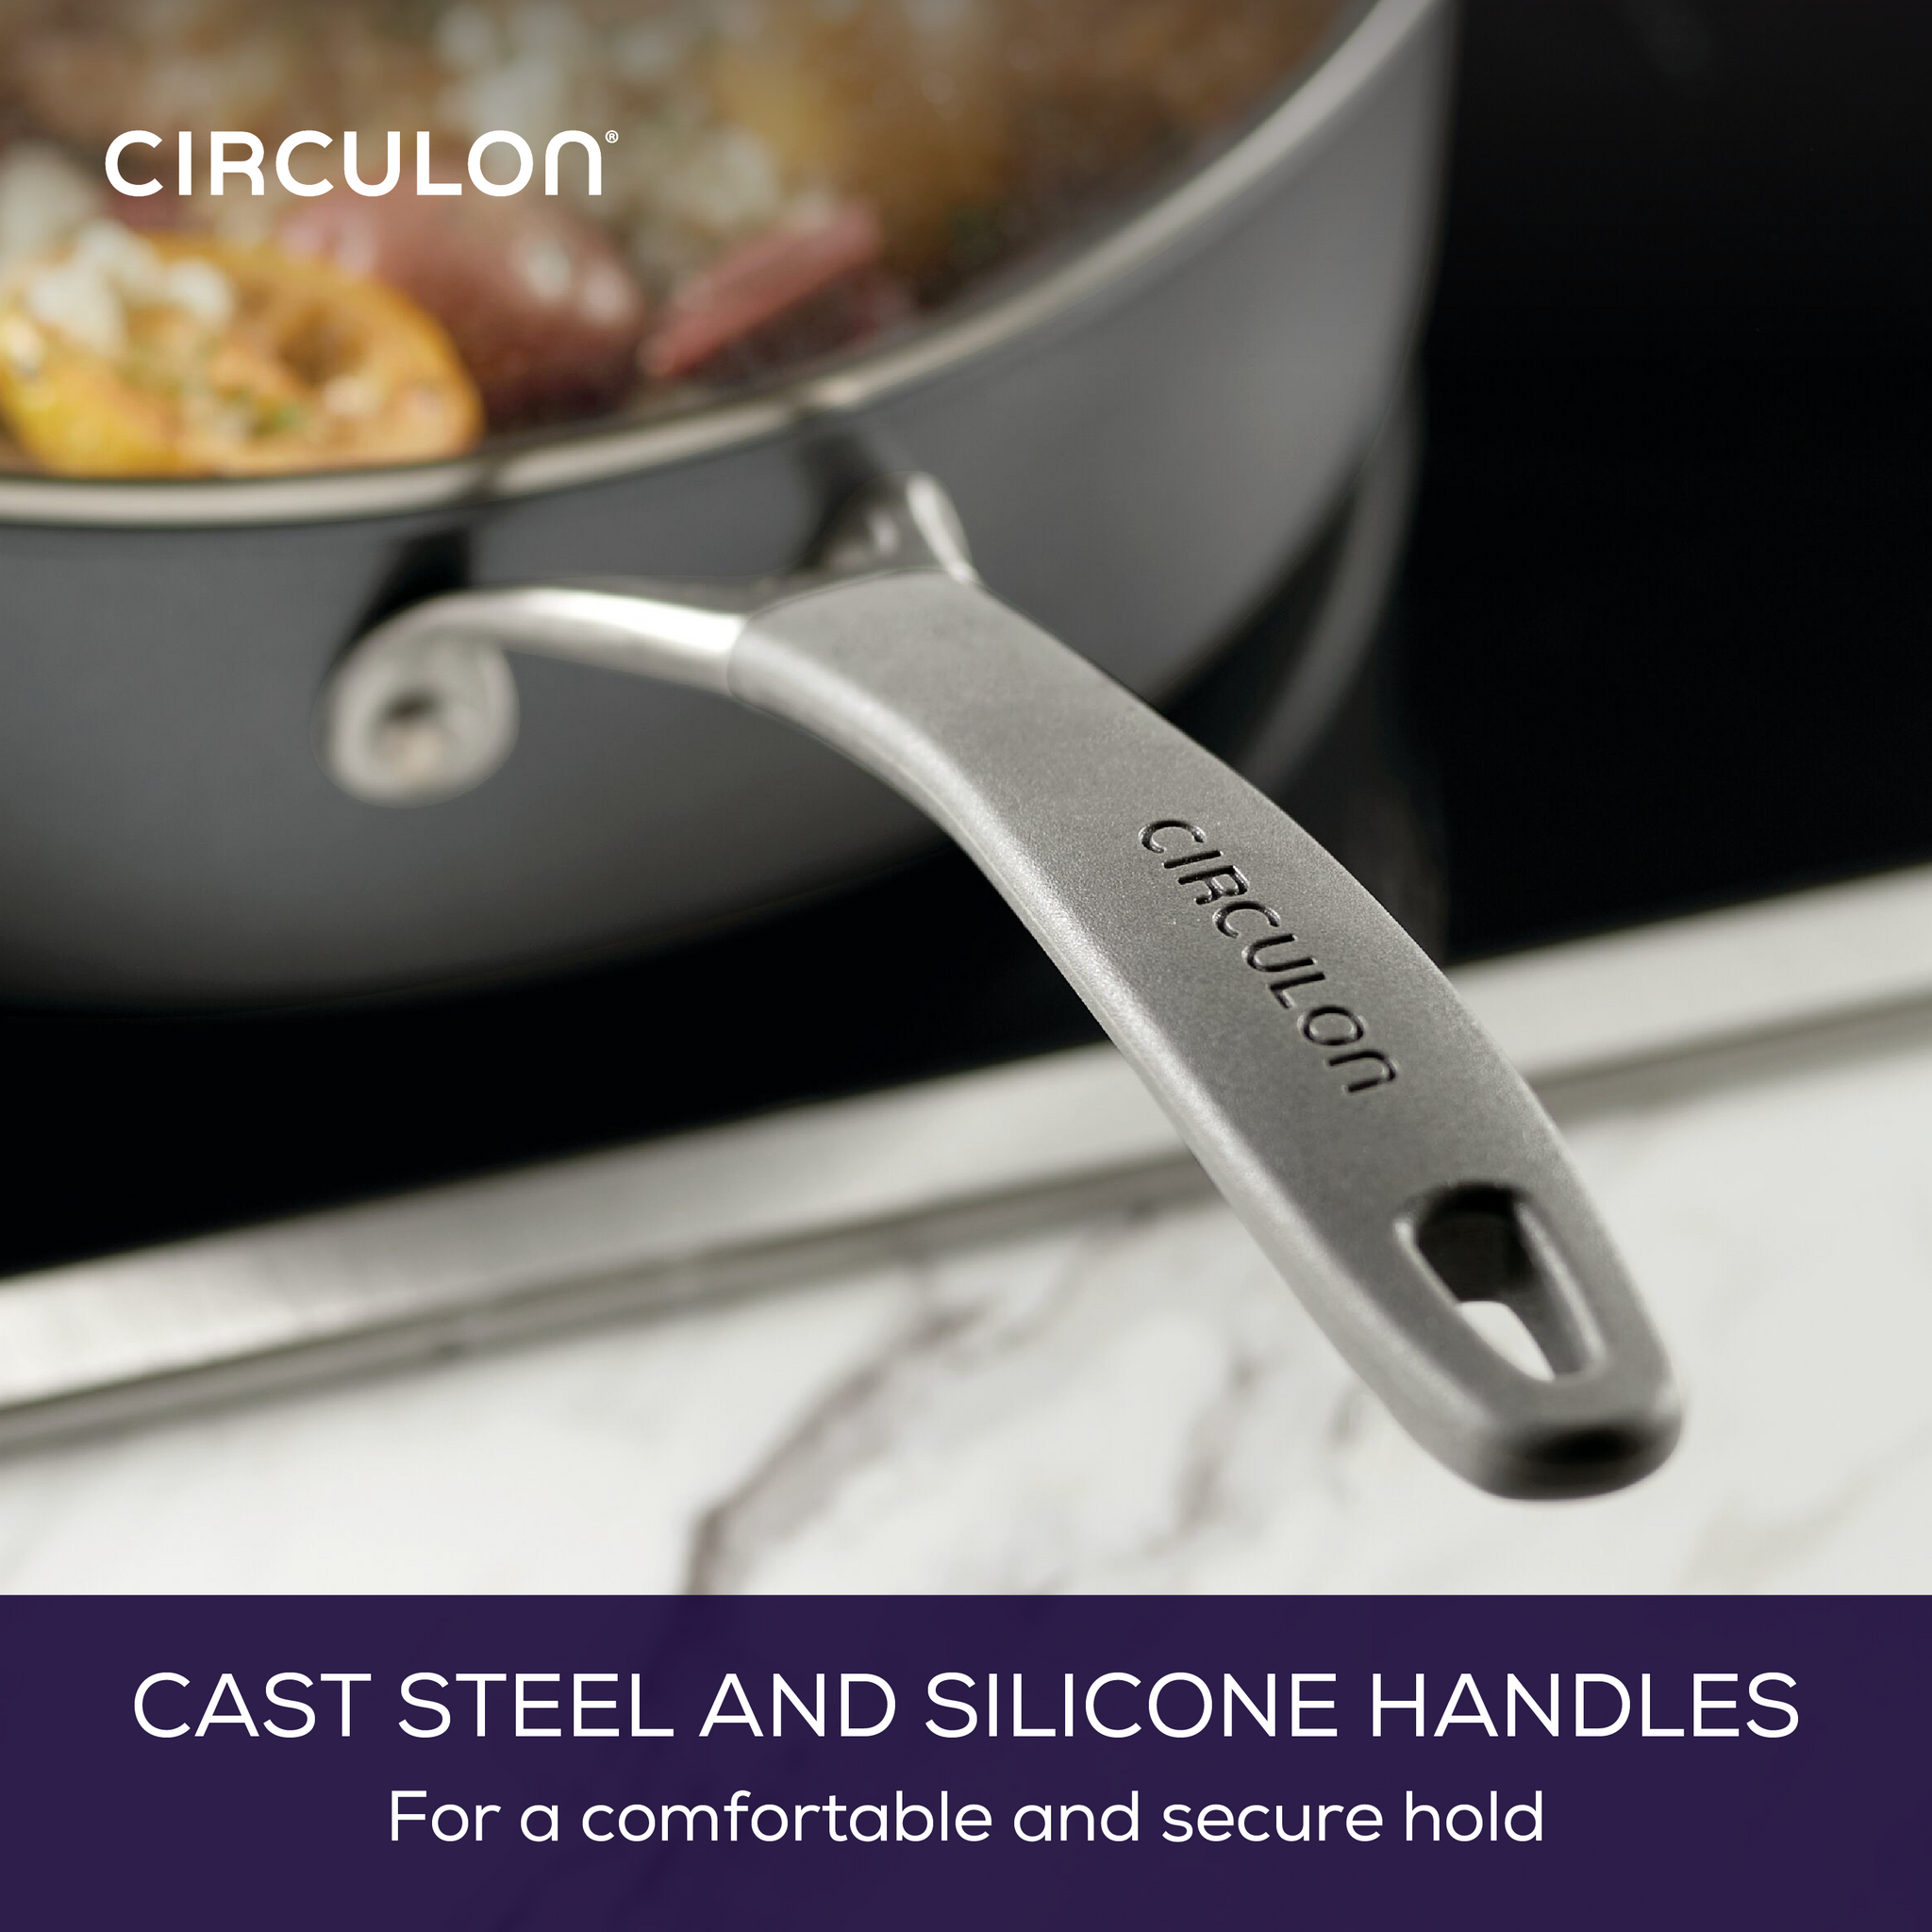 Choice 5 Qt. Aluminum Saute Pan with Black Silicone Handle